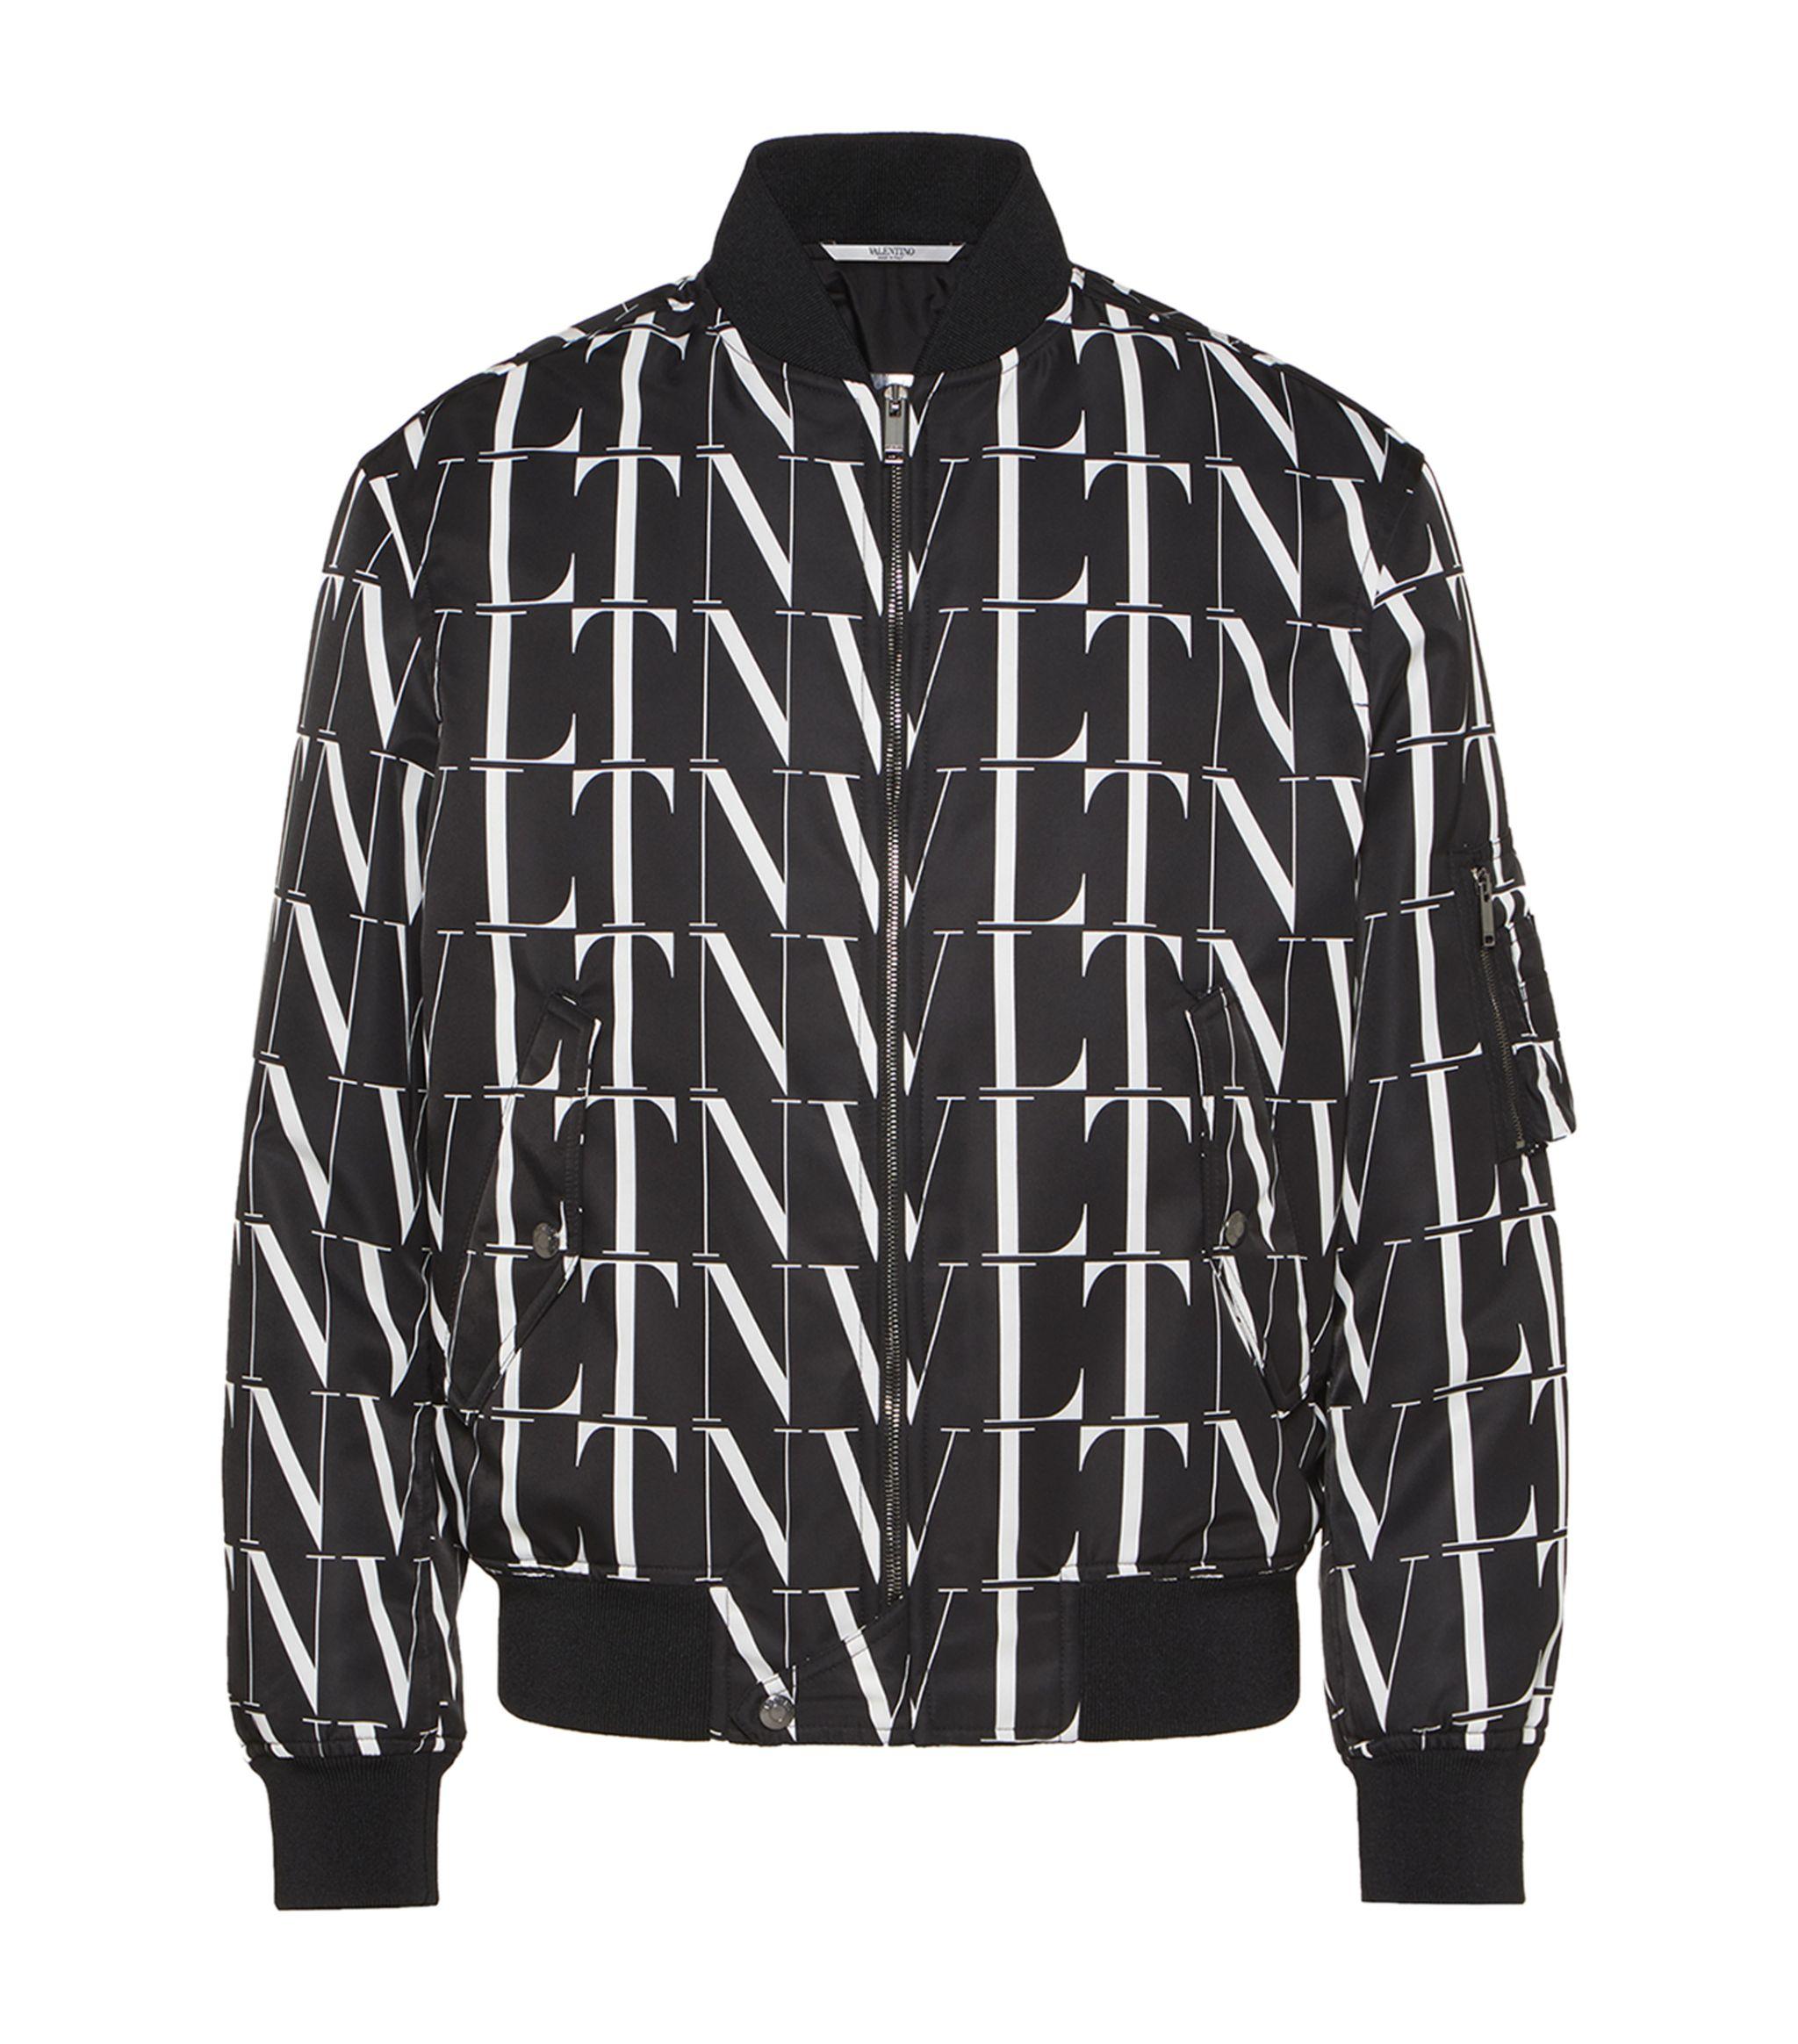 Valentino Synthetic Vltn Times Bomber Jacket in Black for Men - Lyst